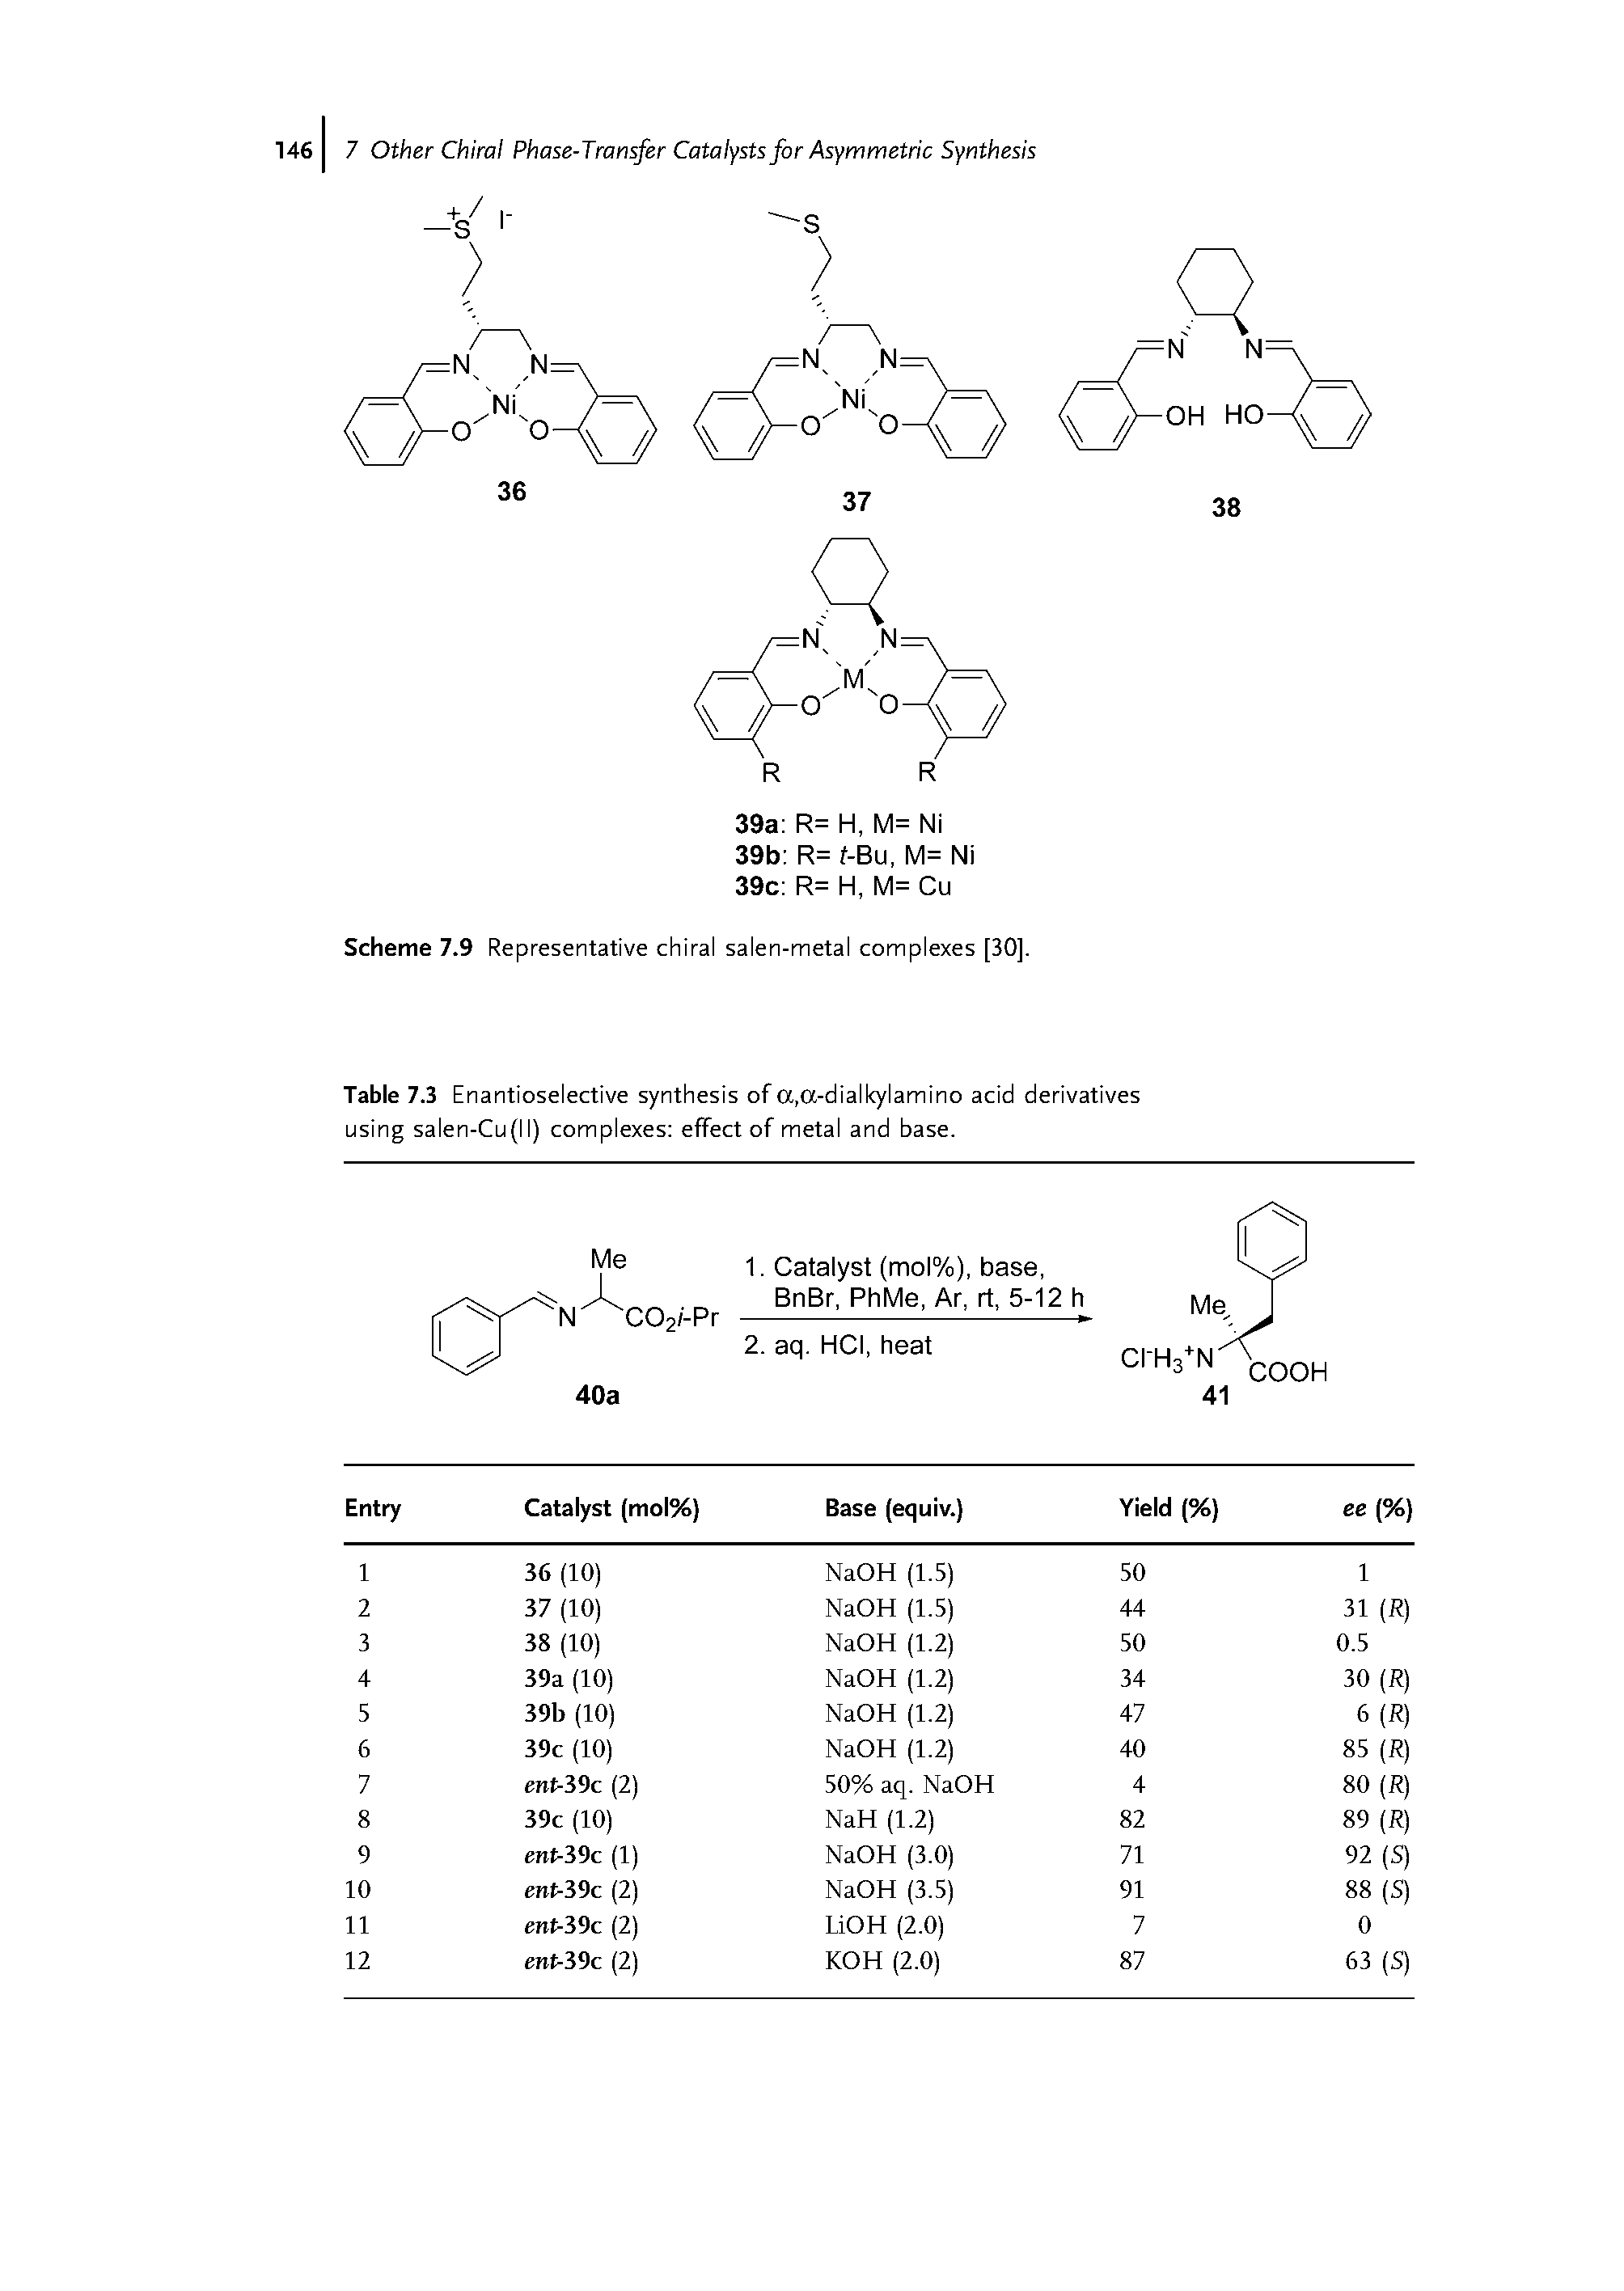 Scheme 7.9 Representative chiral salen-metal complexes [30].